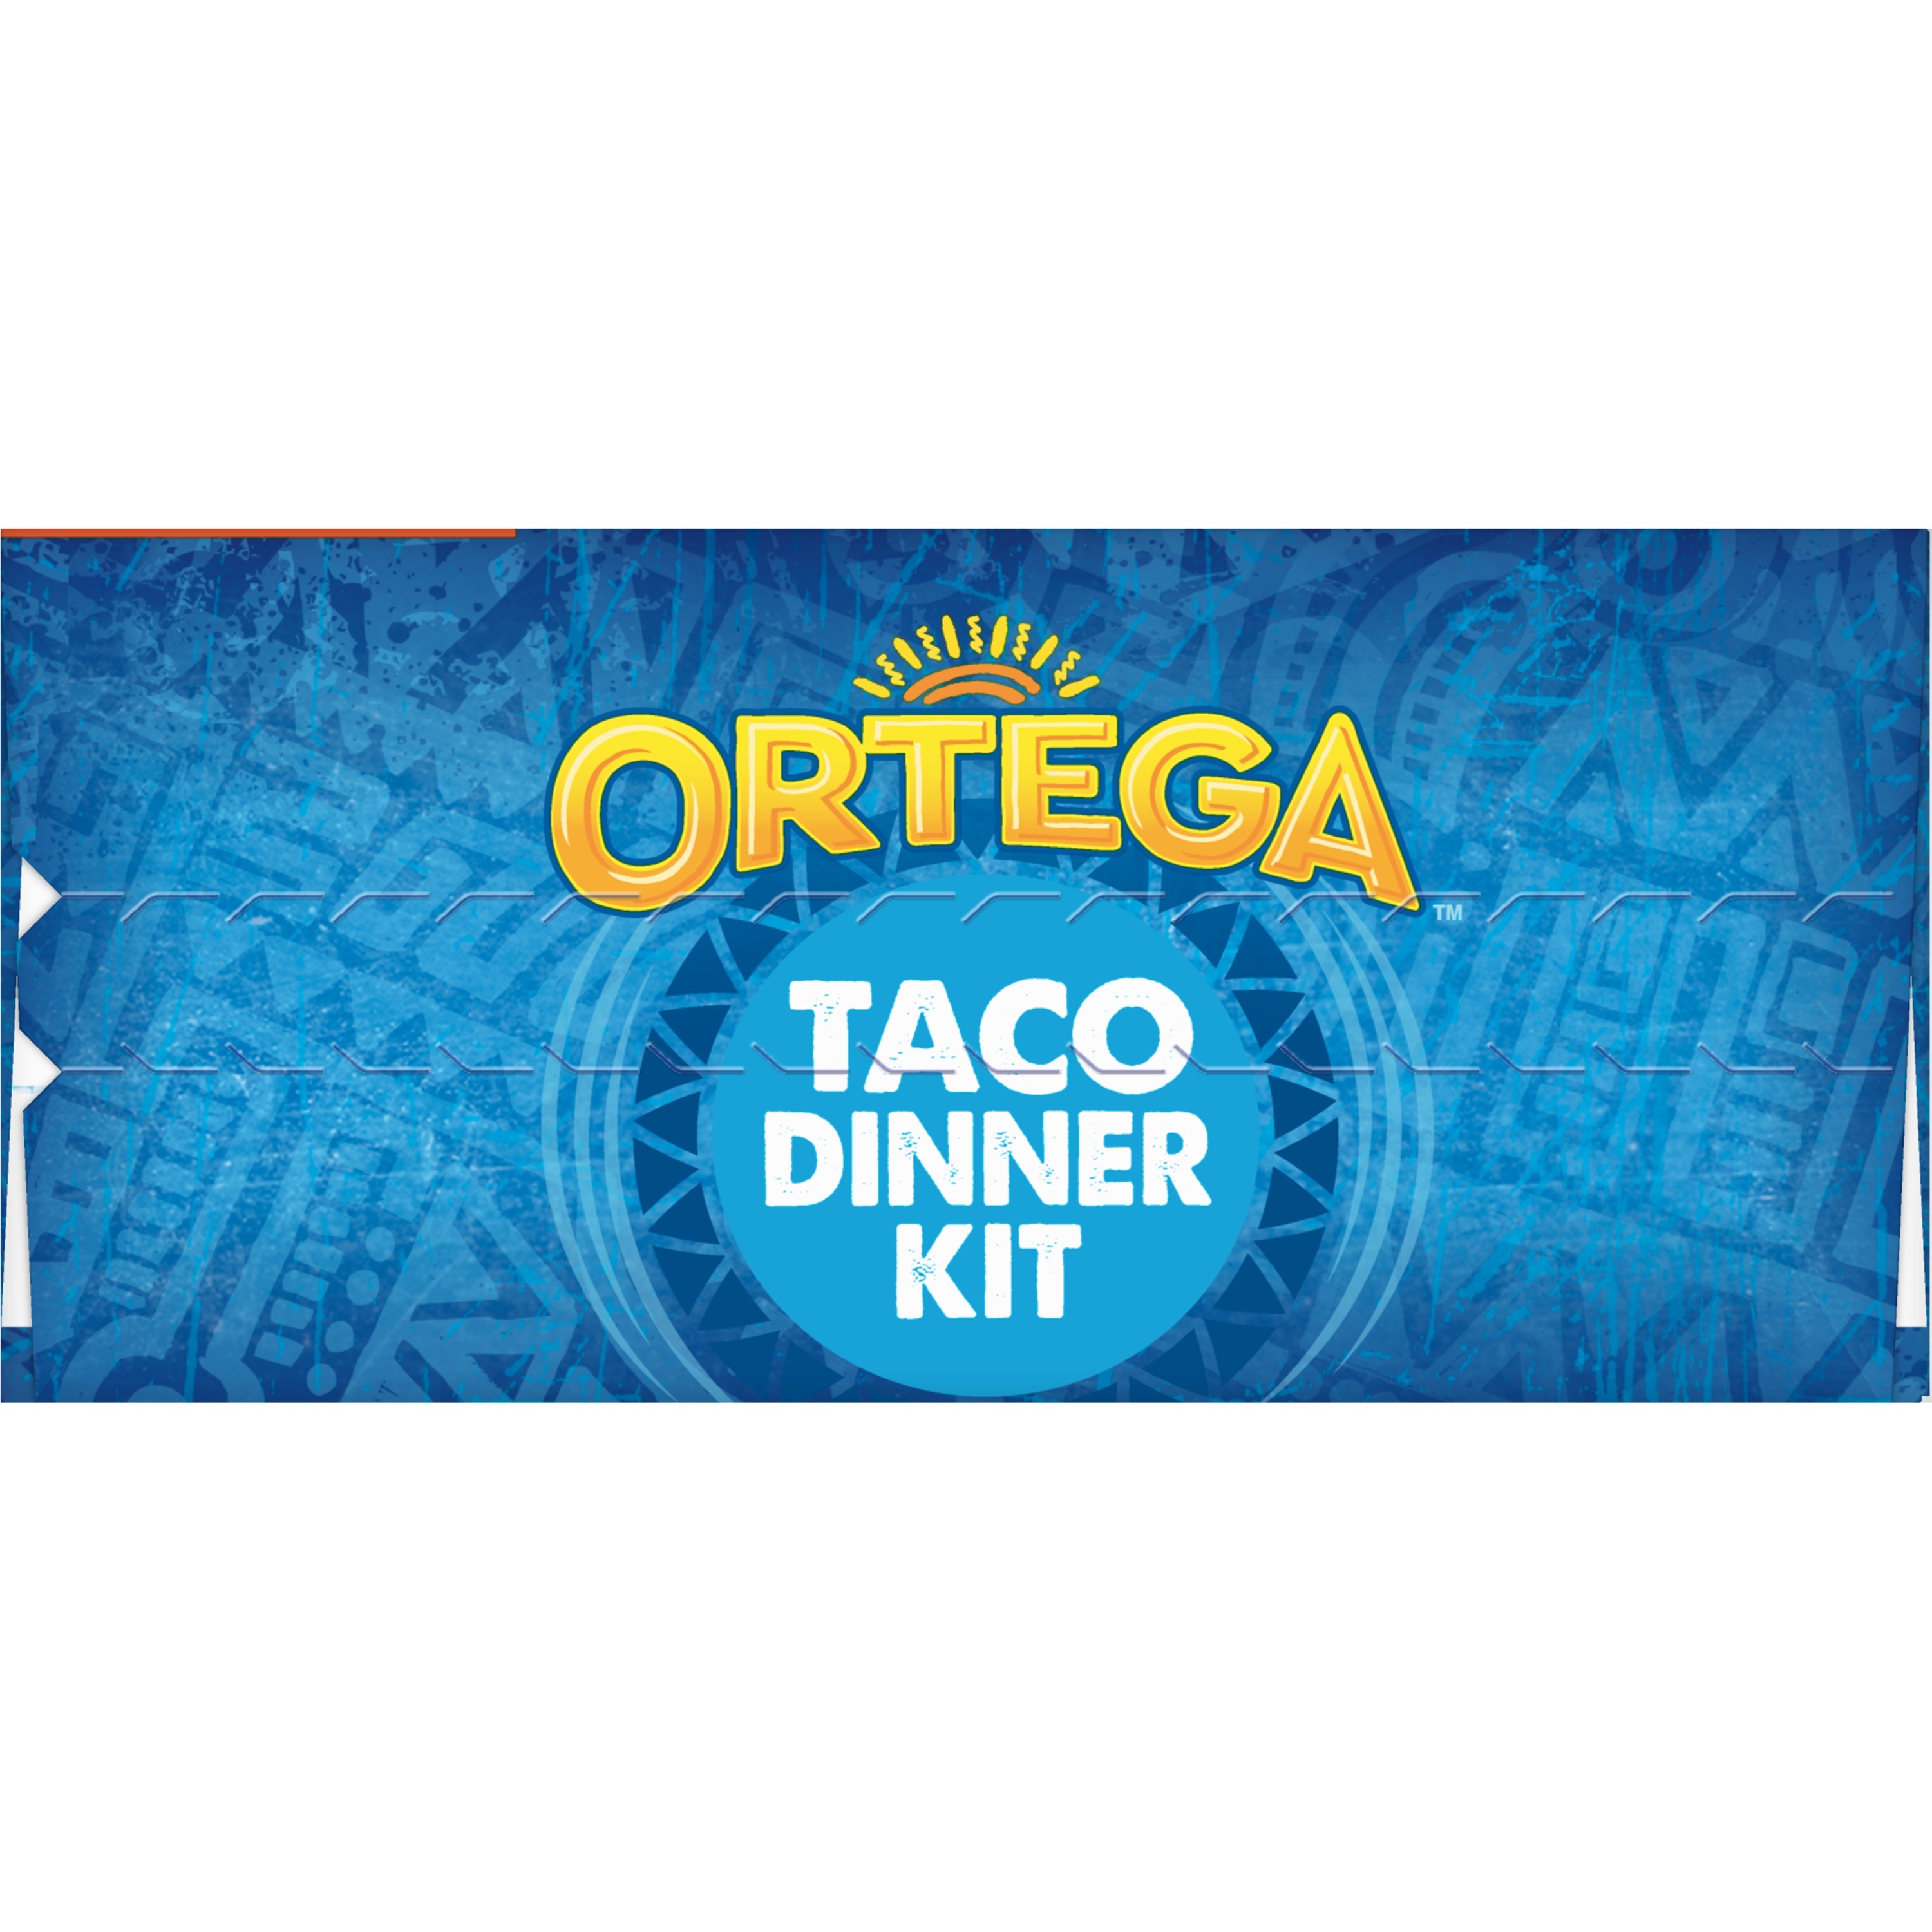 Ortega Taco Dinner Kit, 12 Count Taco Shells, 9.8 oz - image 3 of 9